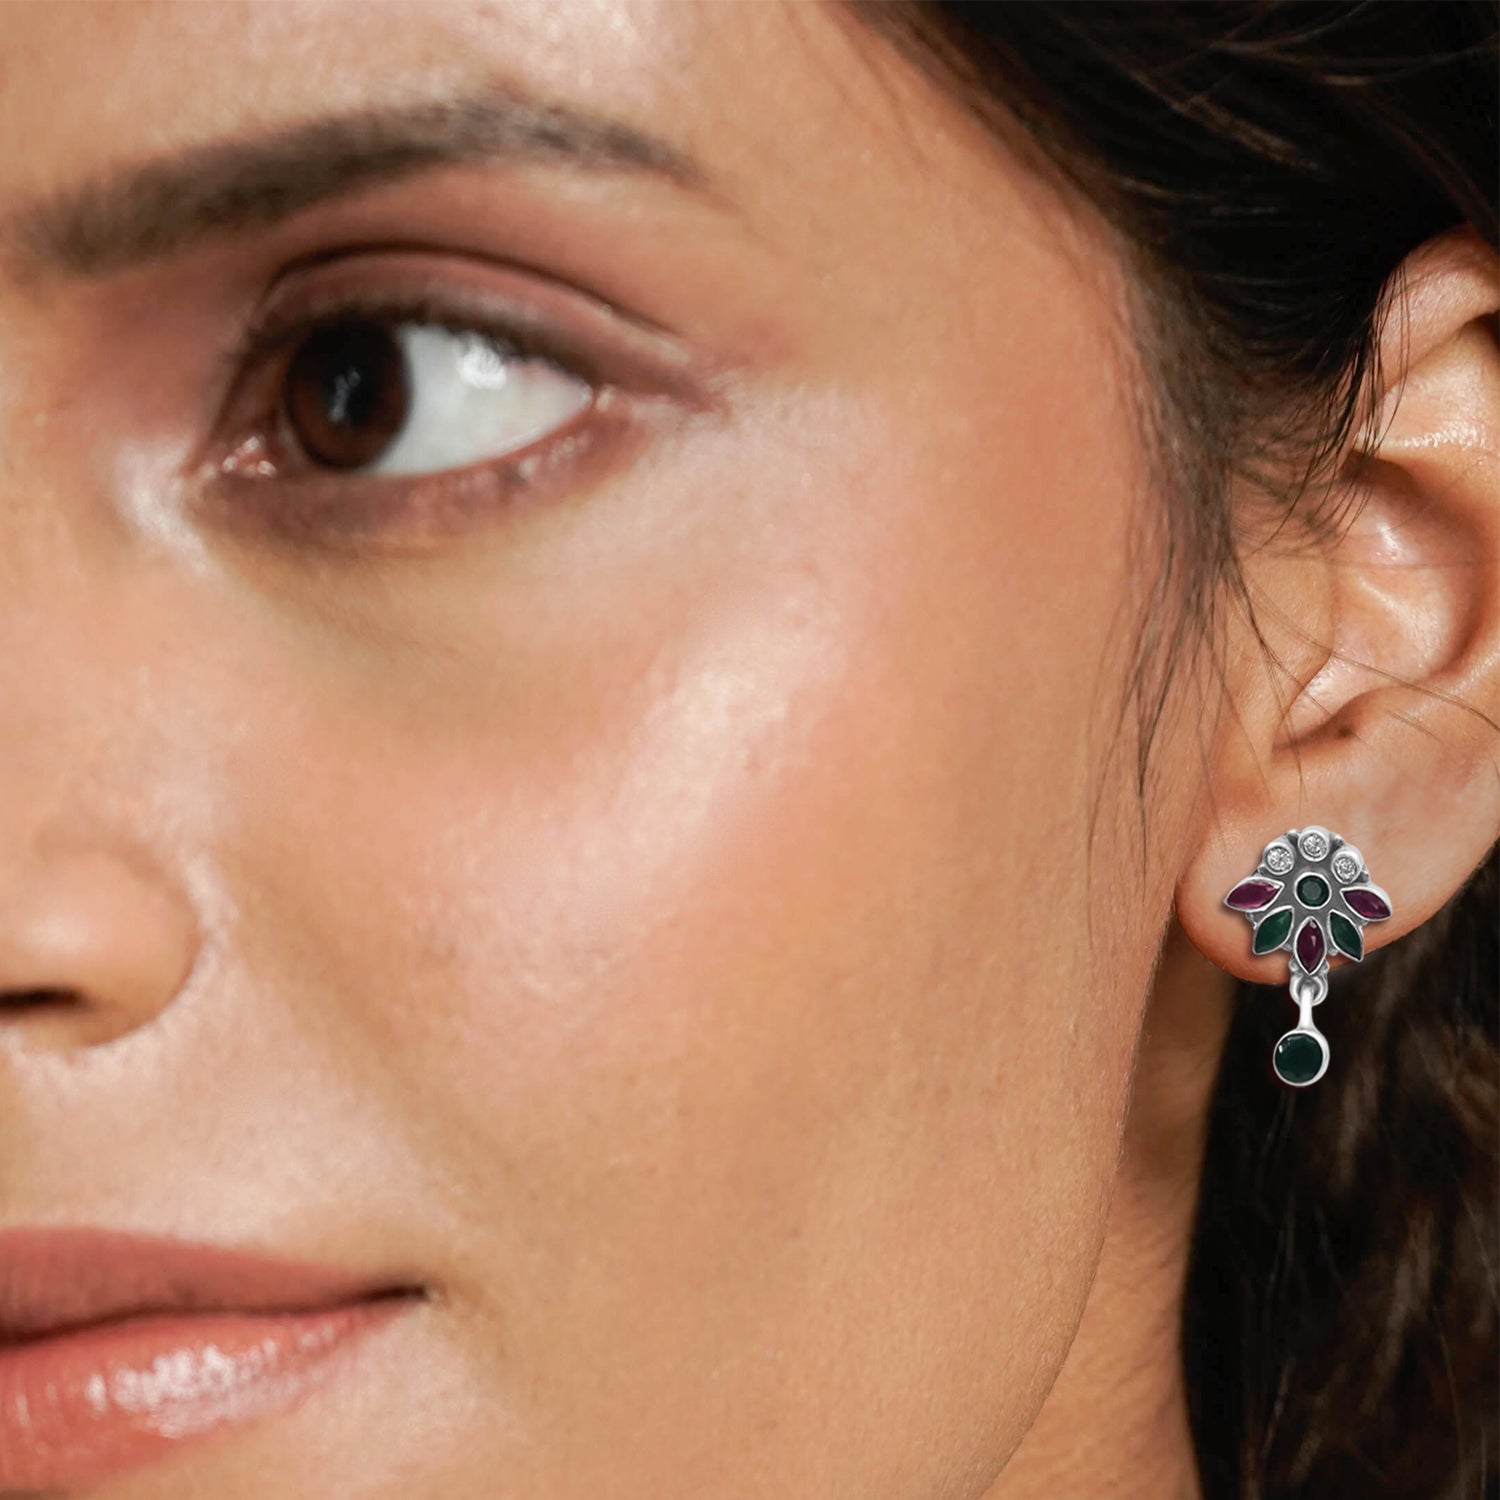 Silver Oxidized Multitone Gemstone Floral Celebration Dangling Earrings